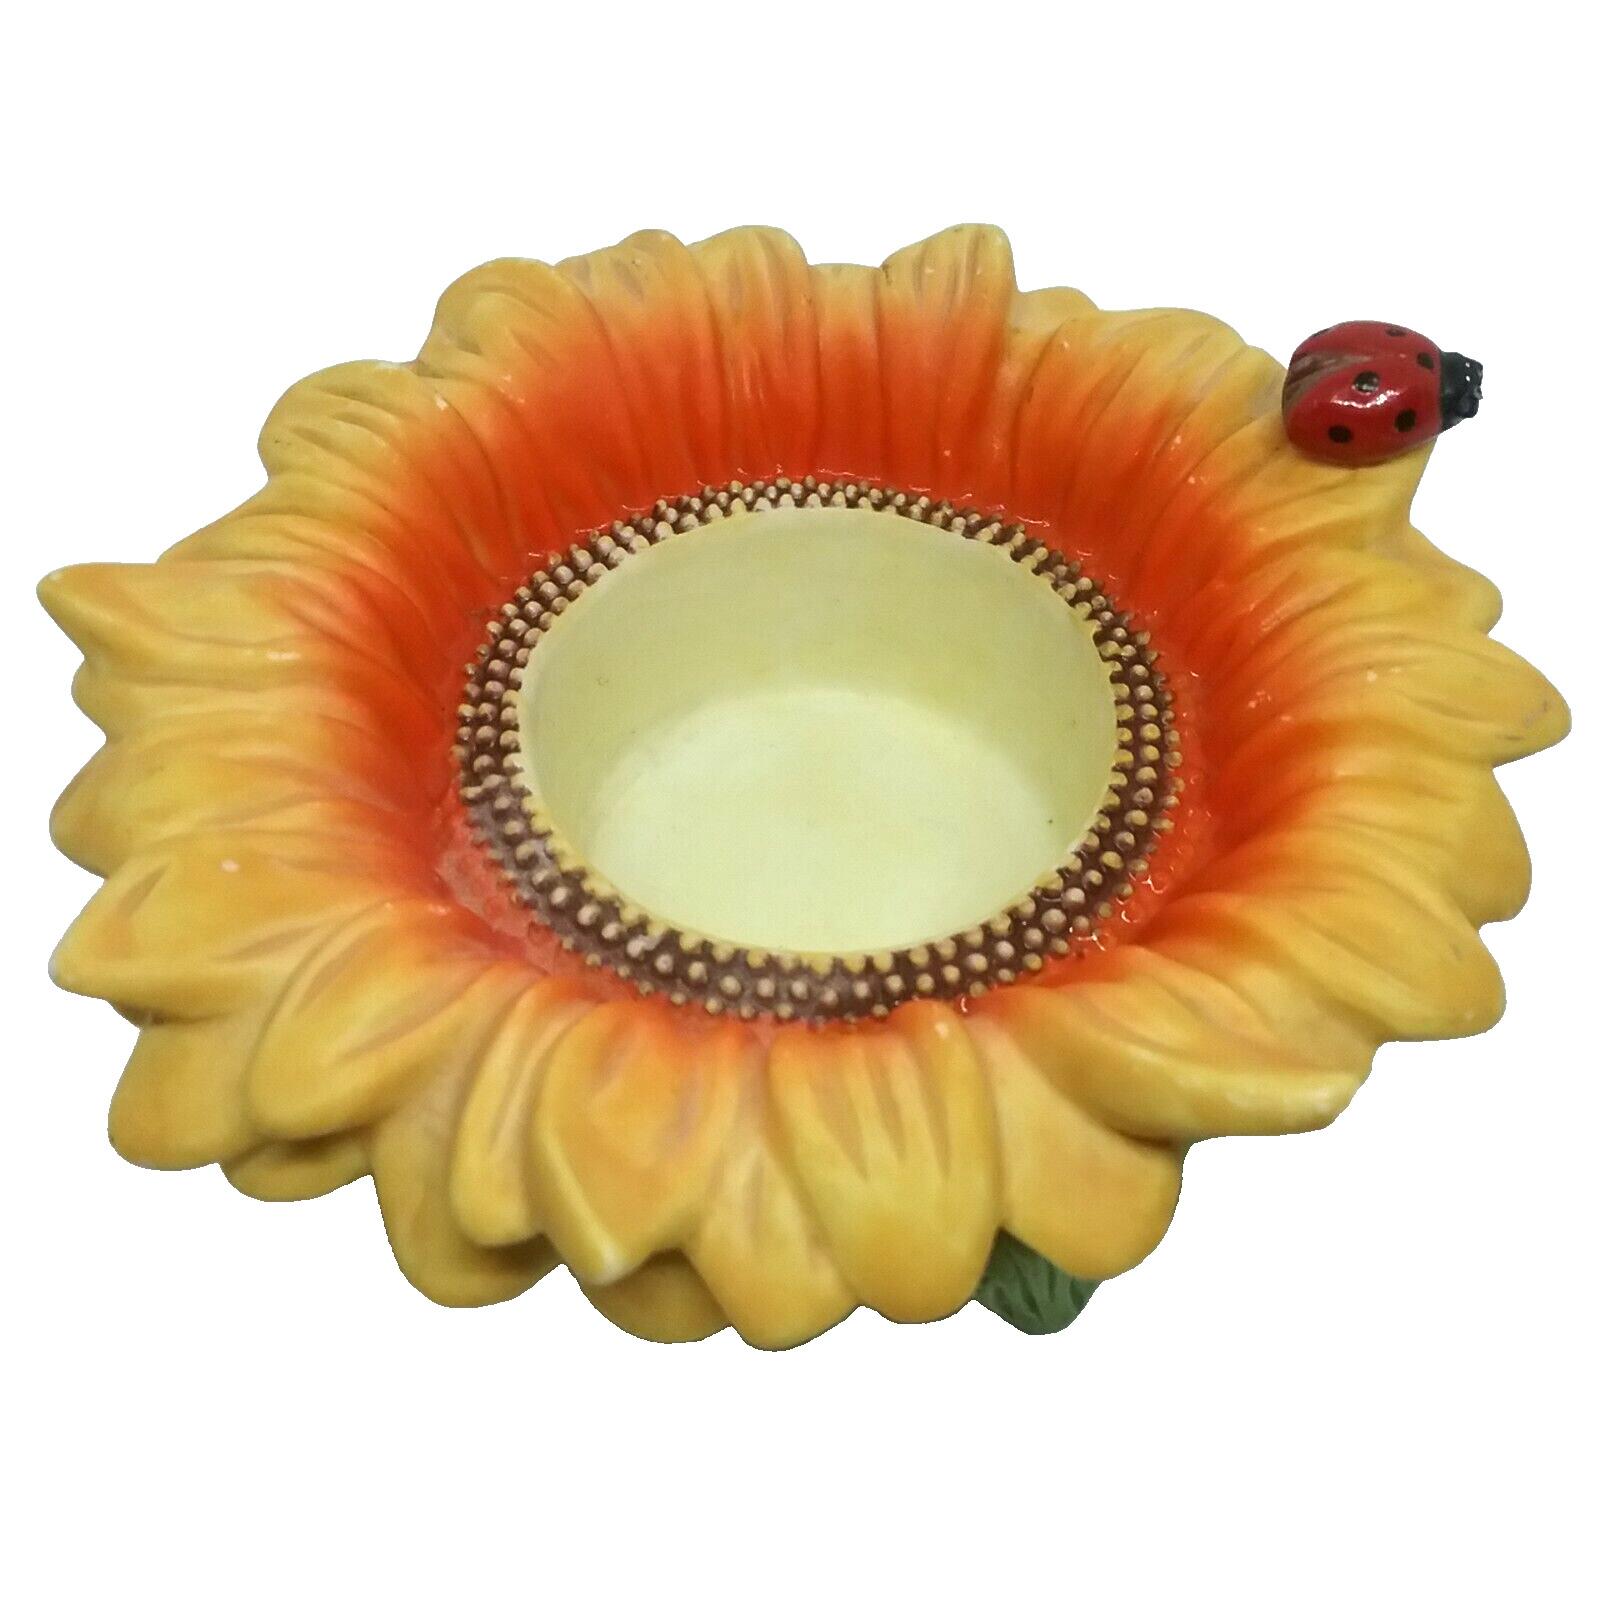 Party lite Sunflower Flower Tea Light Holder Yellow Orange Petals Lady Bug